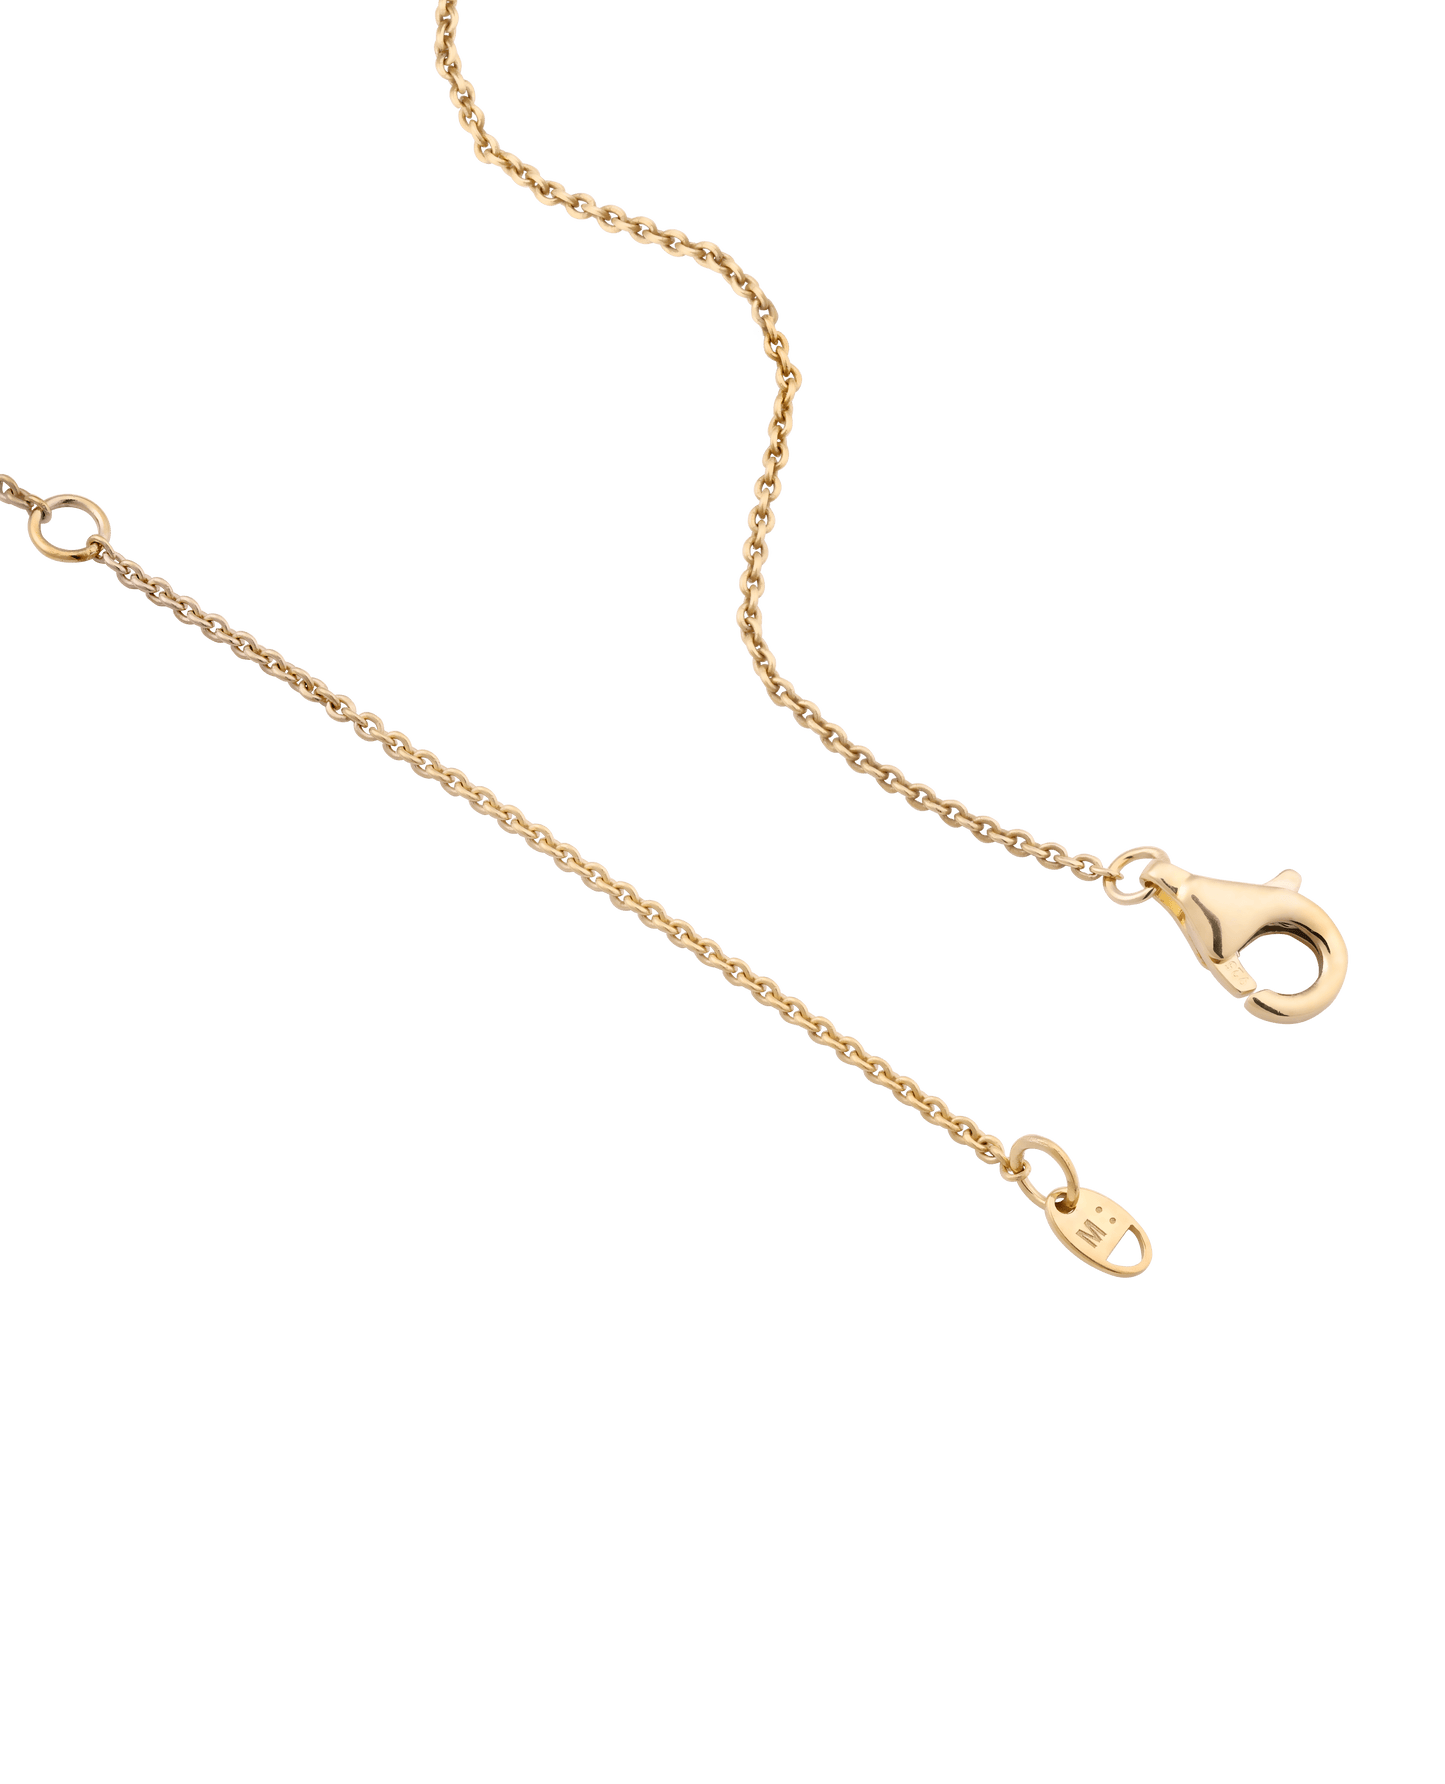 Oval Solitaire Diamond Bracelet - 14K White Gold Bracelets magal-dev 